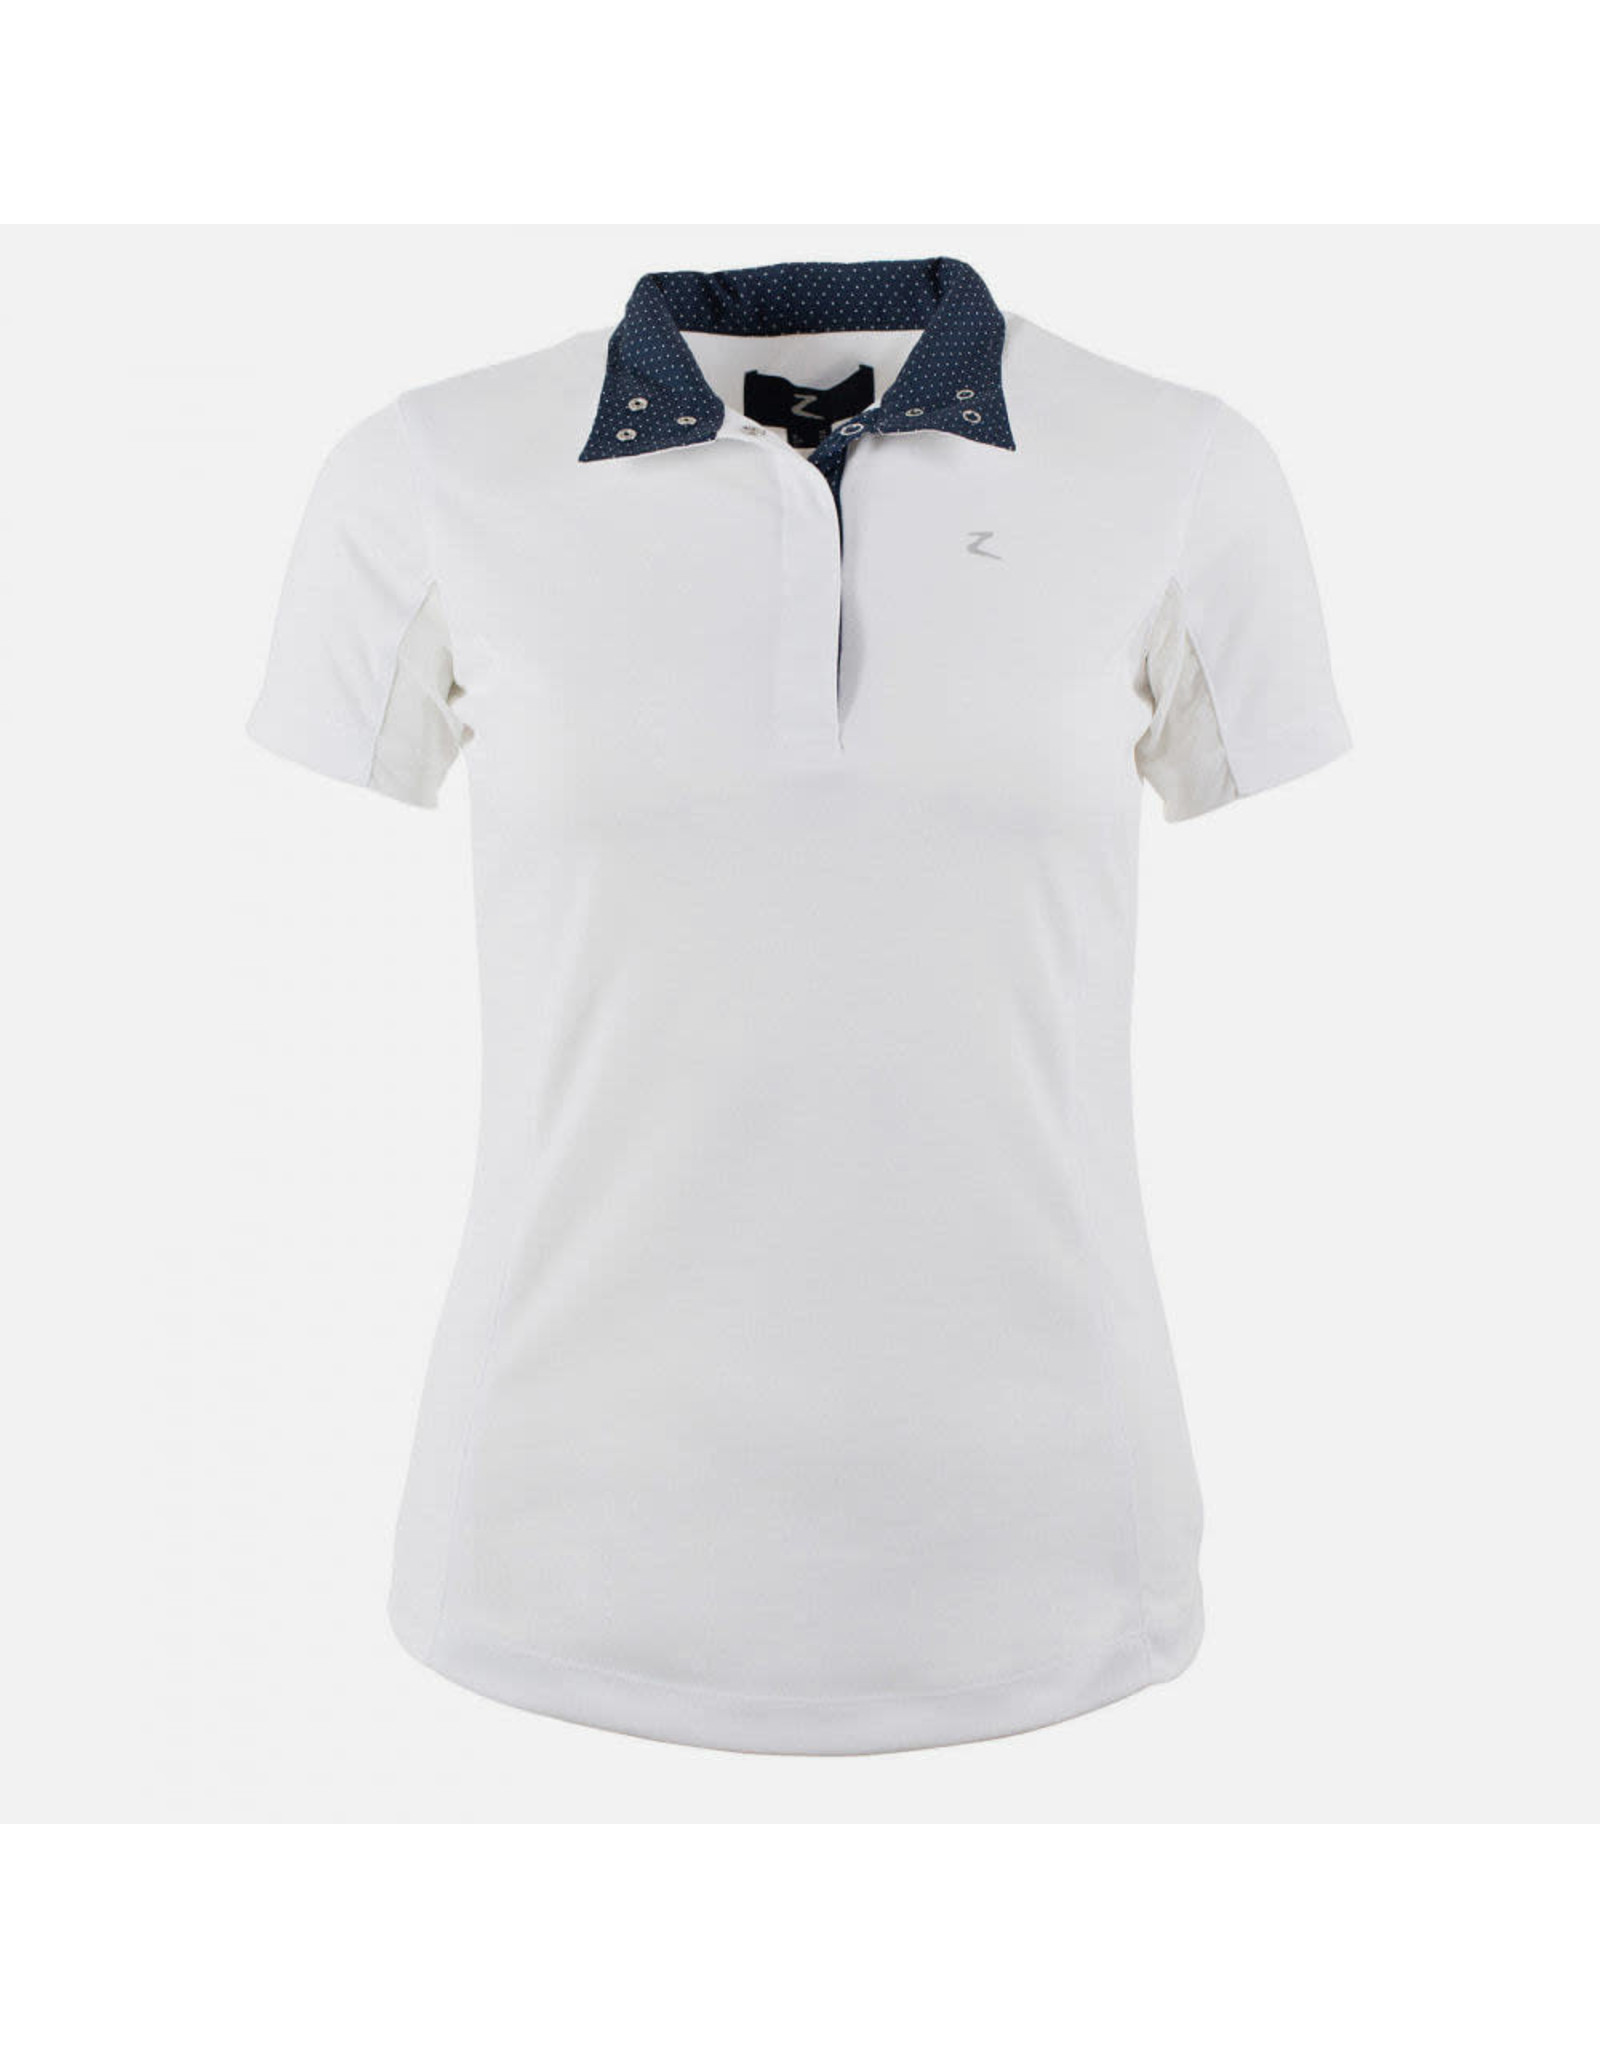 Horze Blaire Show Shirt Short Sleeve White w/ Navy Dot